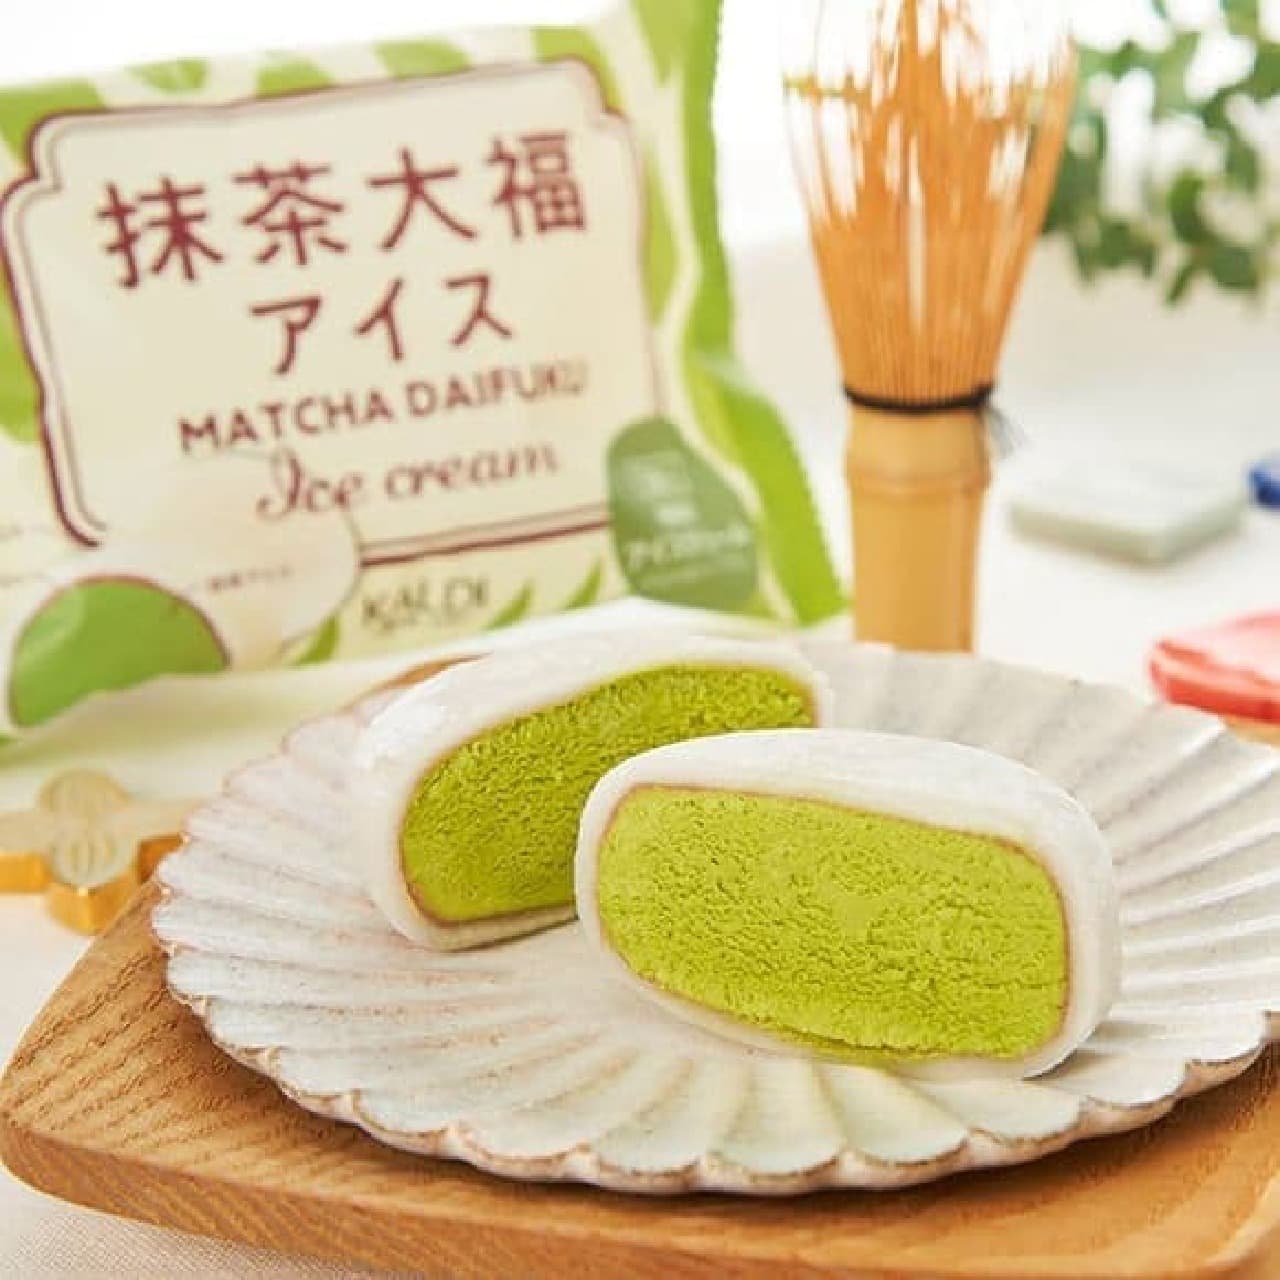 KALDI "Matcha Daifuku Ice Cream"